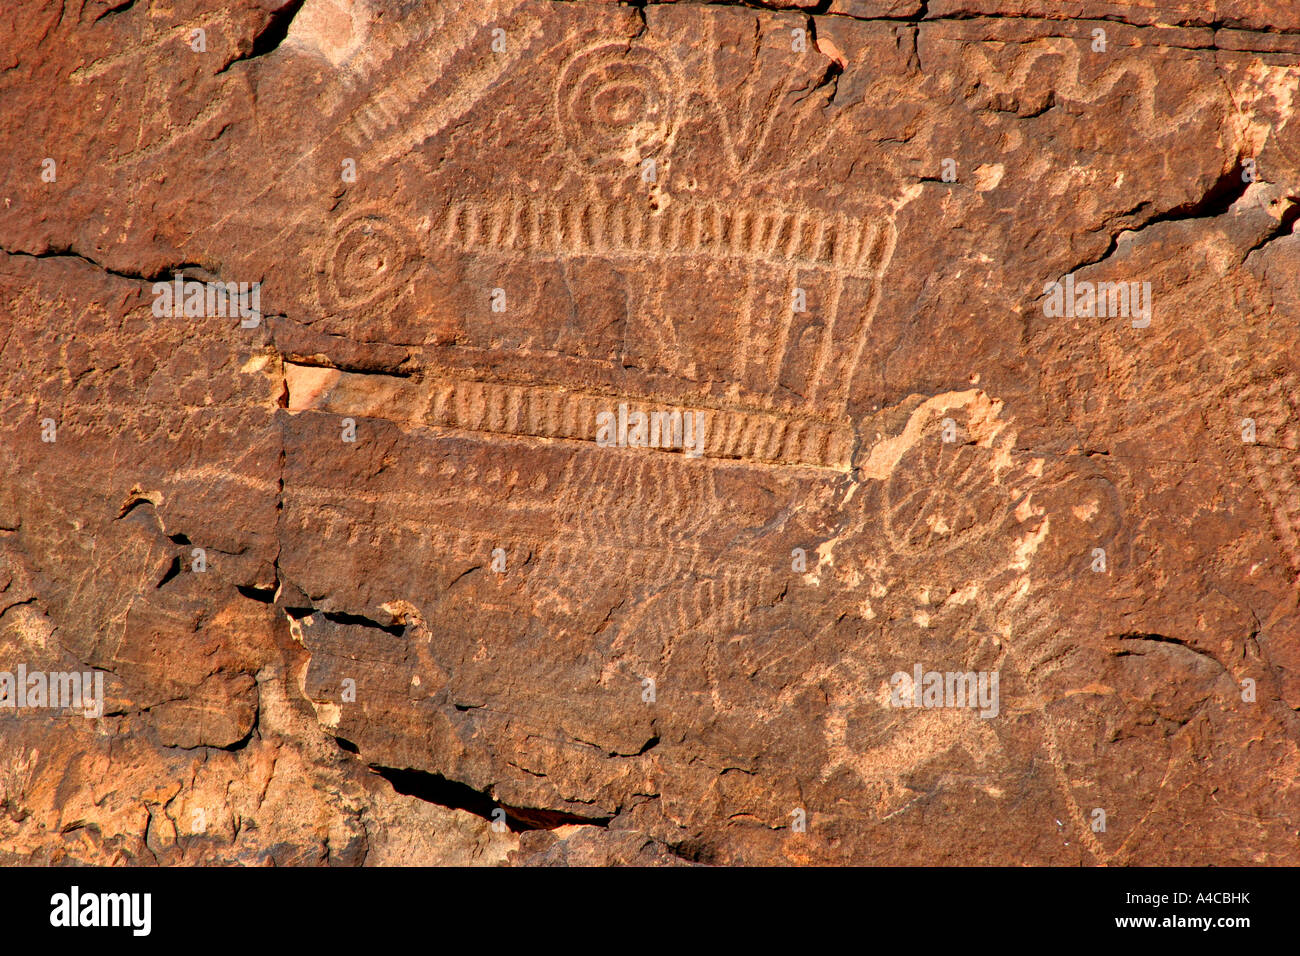 parowan gap petroglyphs, utah Stock Photo - Alamy